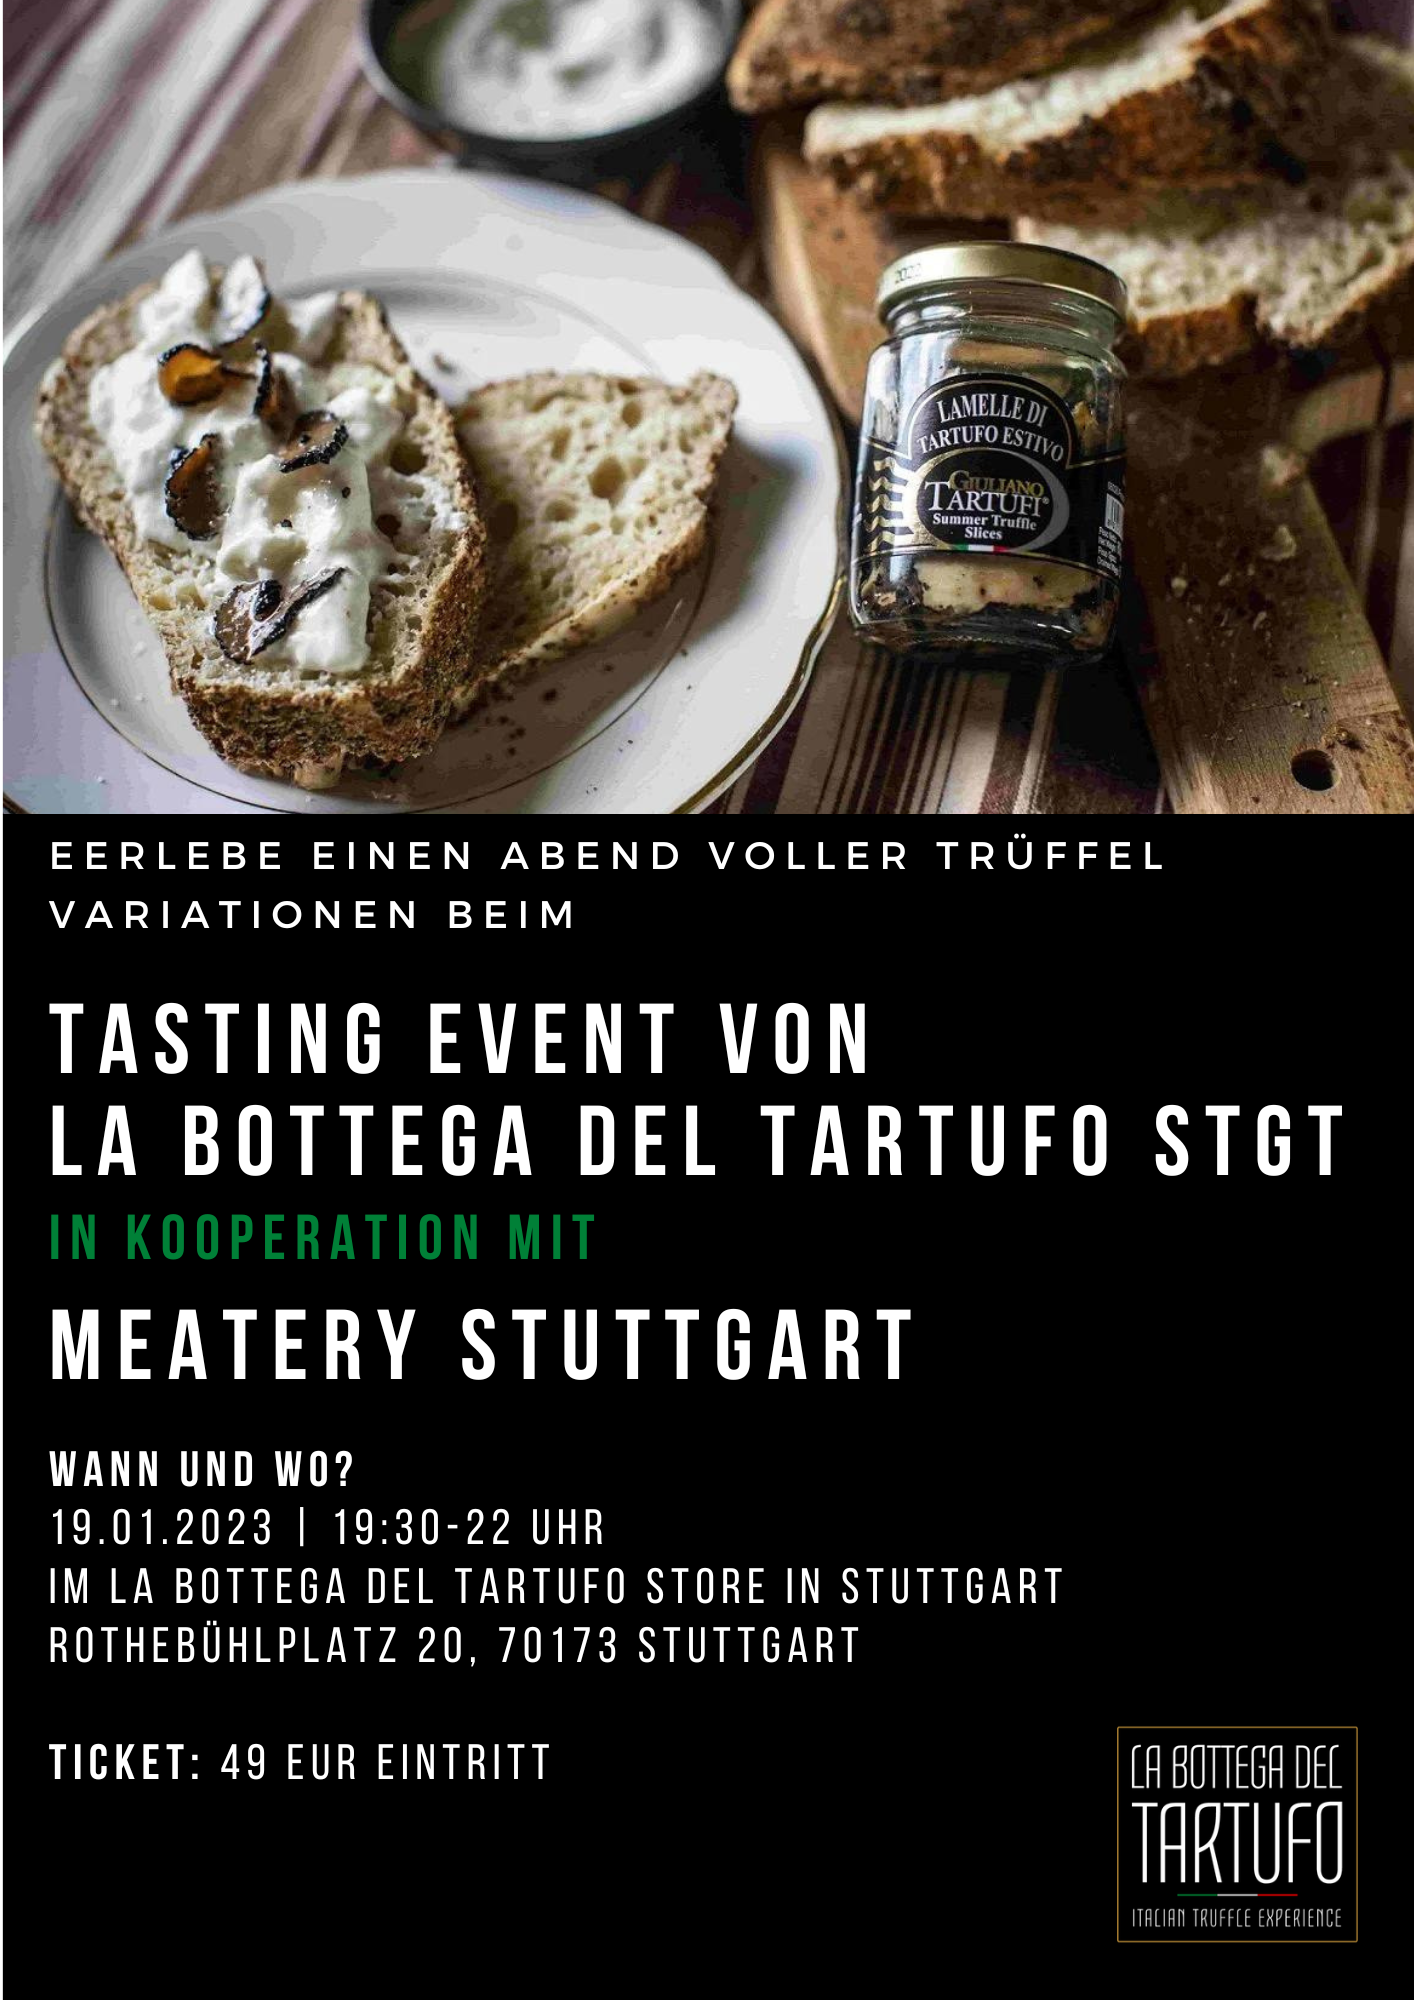 TICKET Trüffel Tasting Event in Stuttgart am 19.01.2023